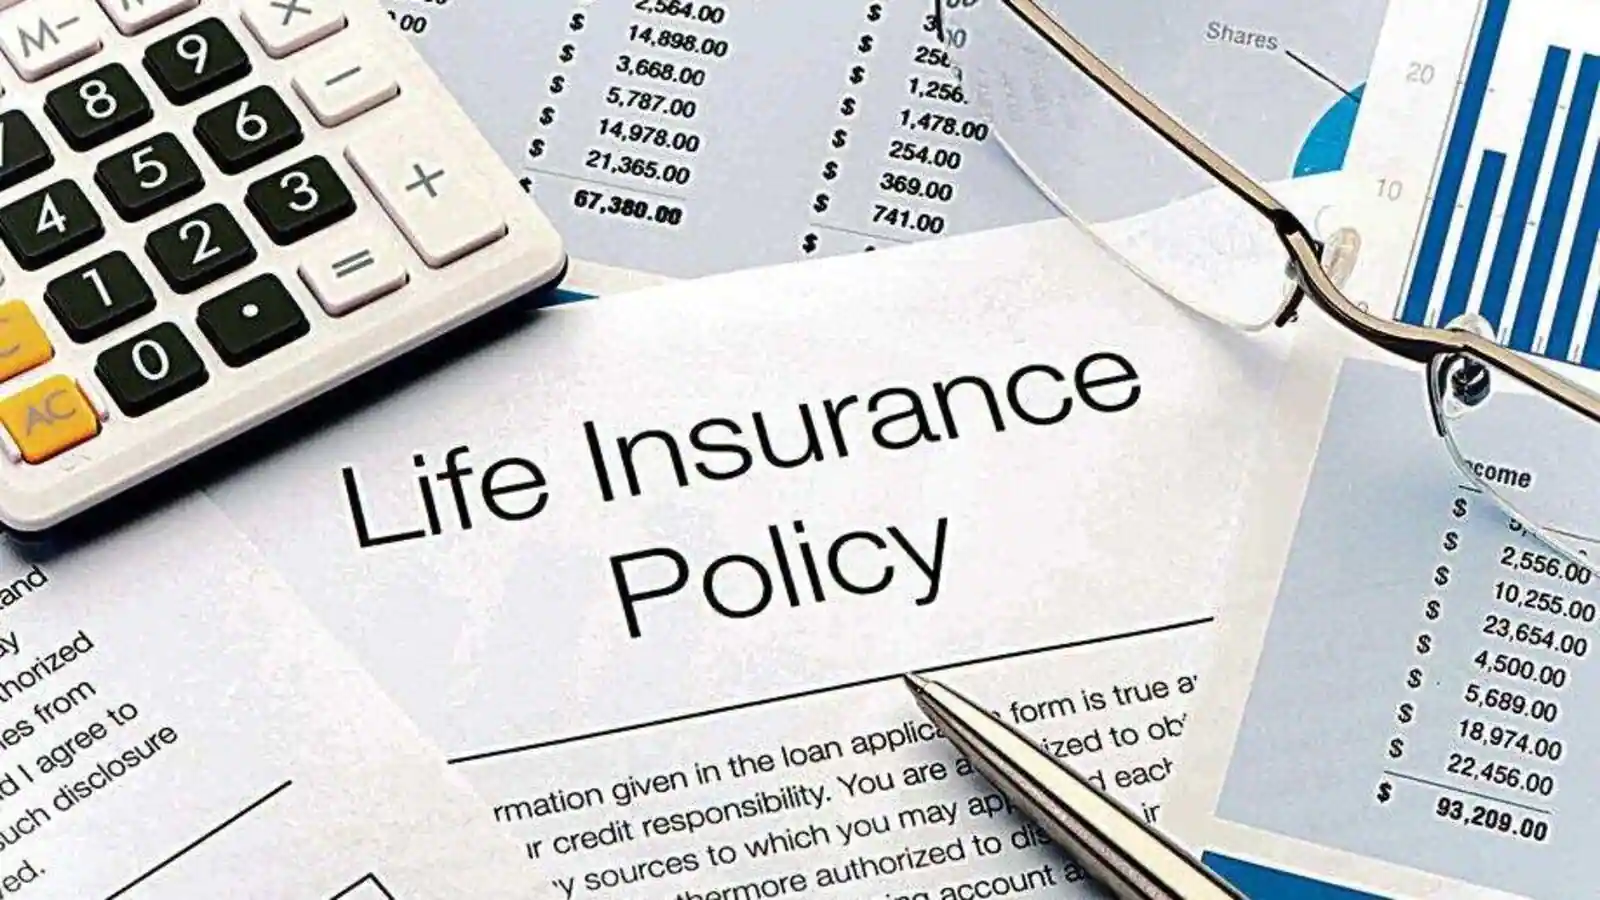 Minnesota life insurance company